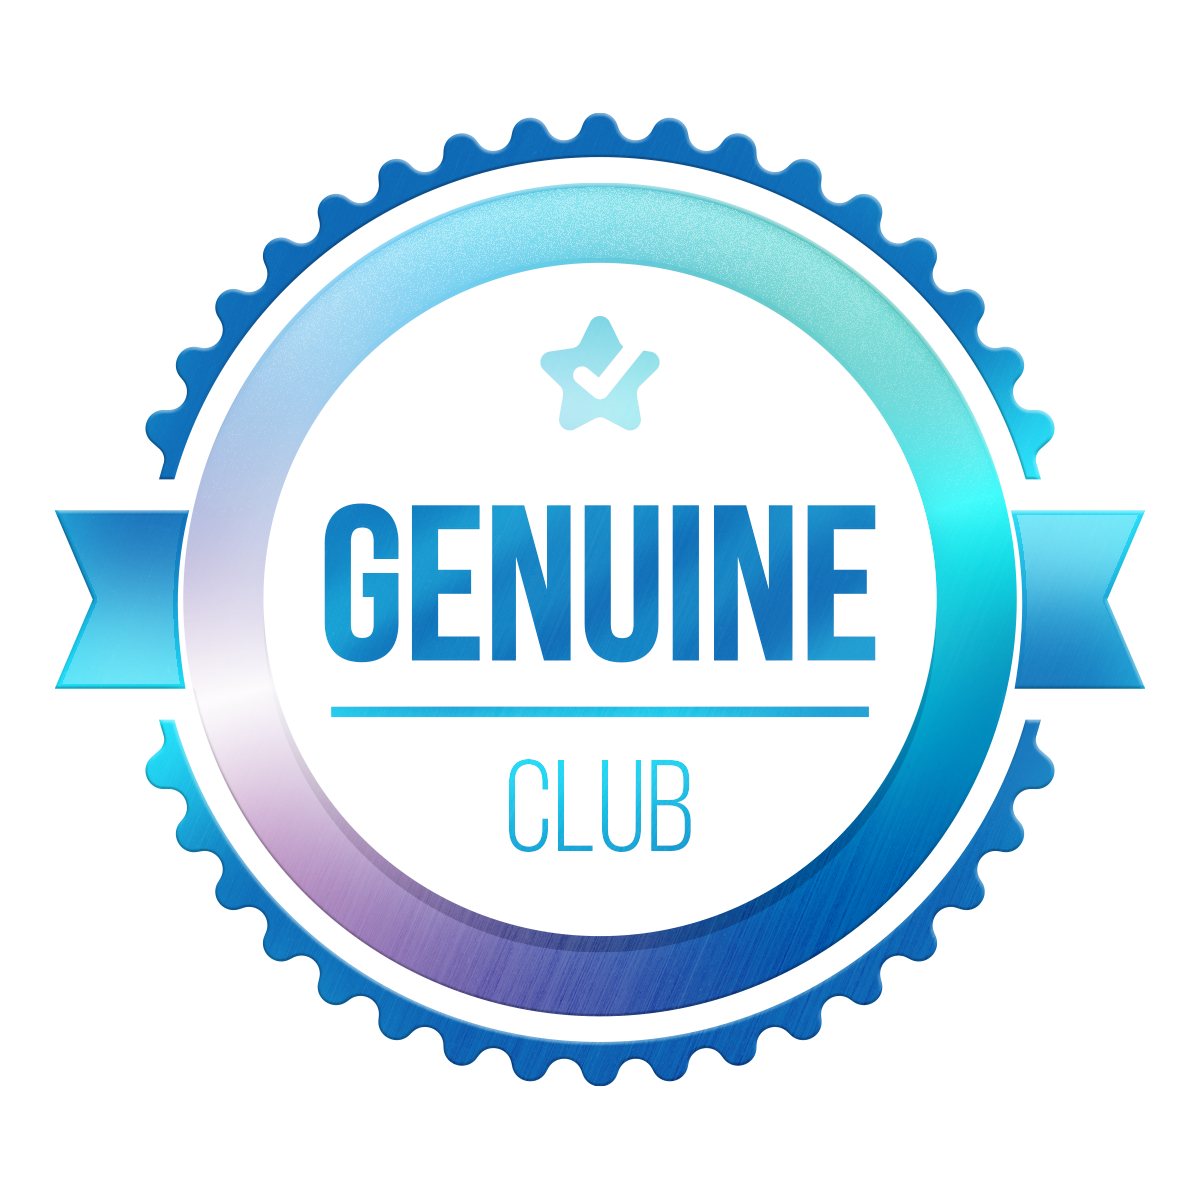 Microsoft Genuine Club